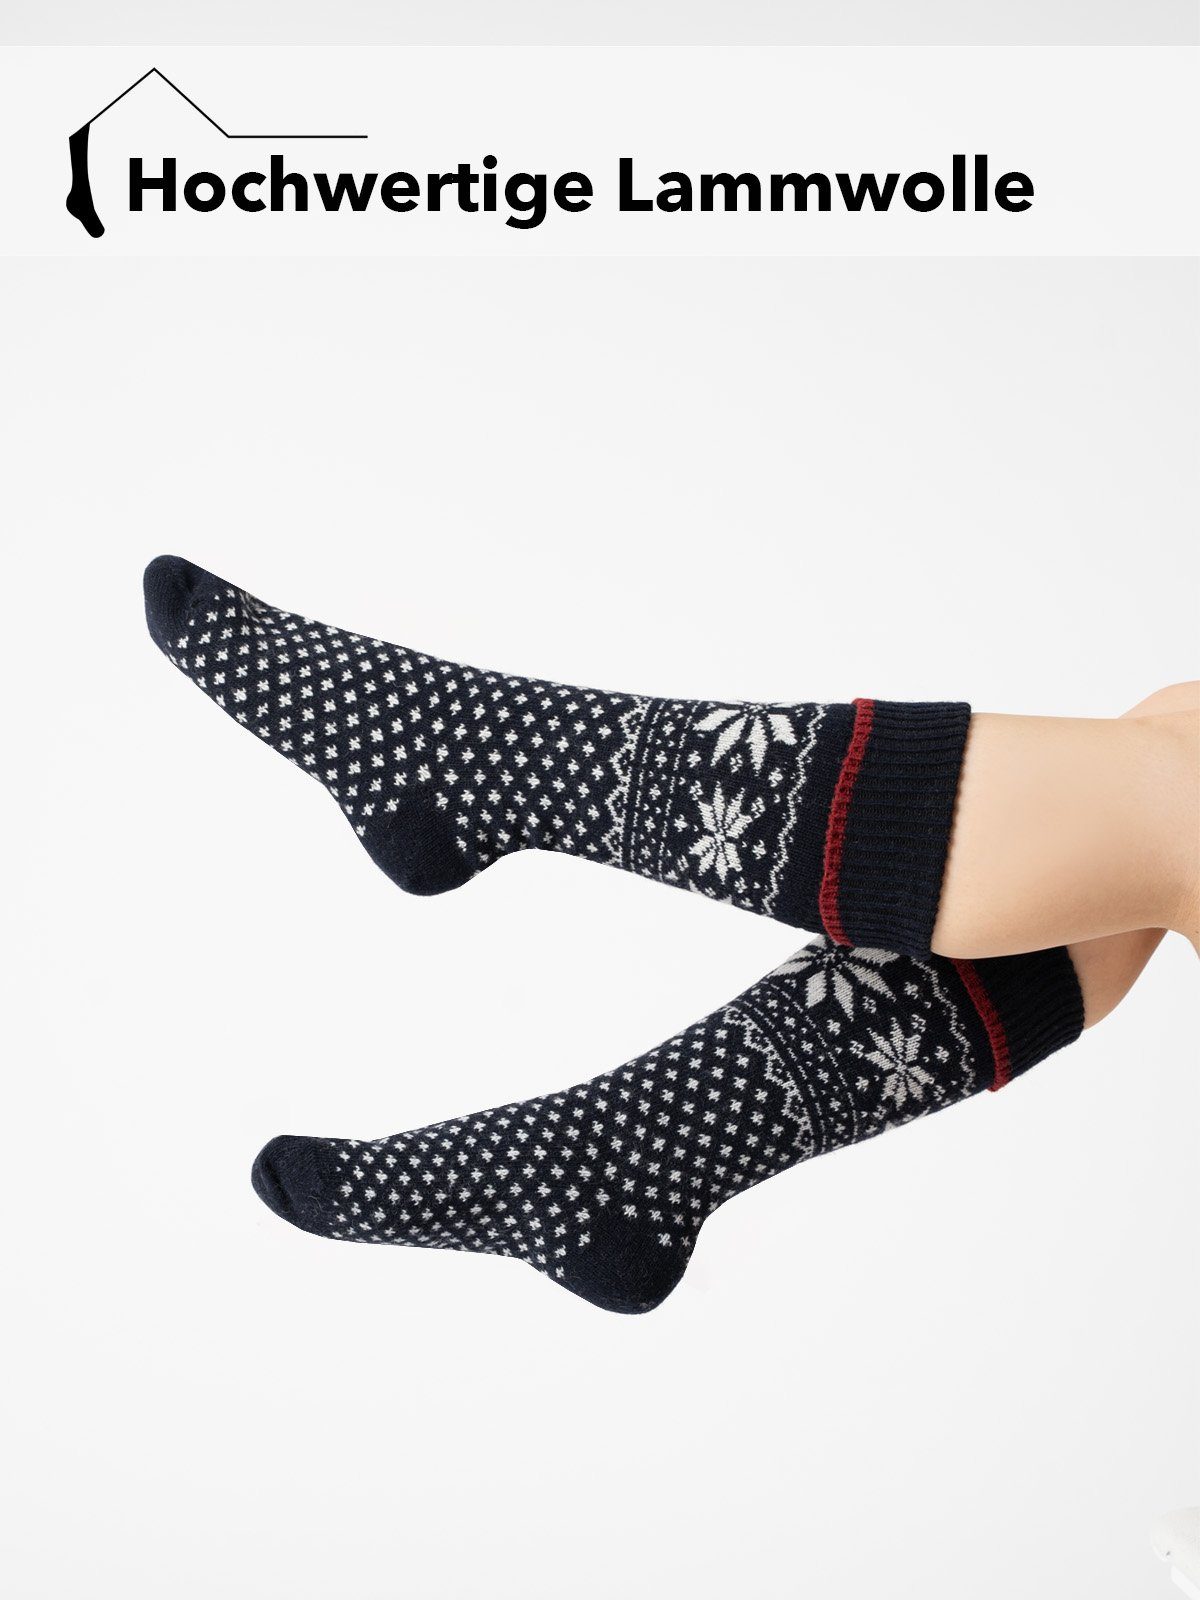 HomeOfSocks Socken Skandinavische Wollsocke "Norwegen-Lammwolle" Nordic Design Kuschelsocken Dicke Mit 70% Norwegischem Grau Aus Hyggelig Warm Lamm In Wolle Wollanteil Hohem Socken